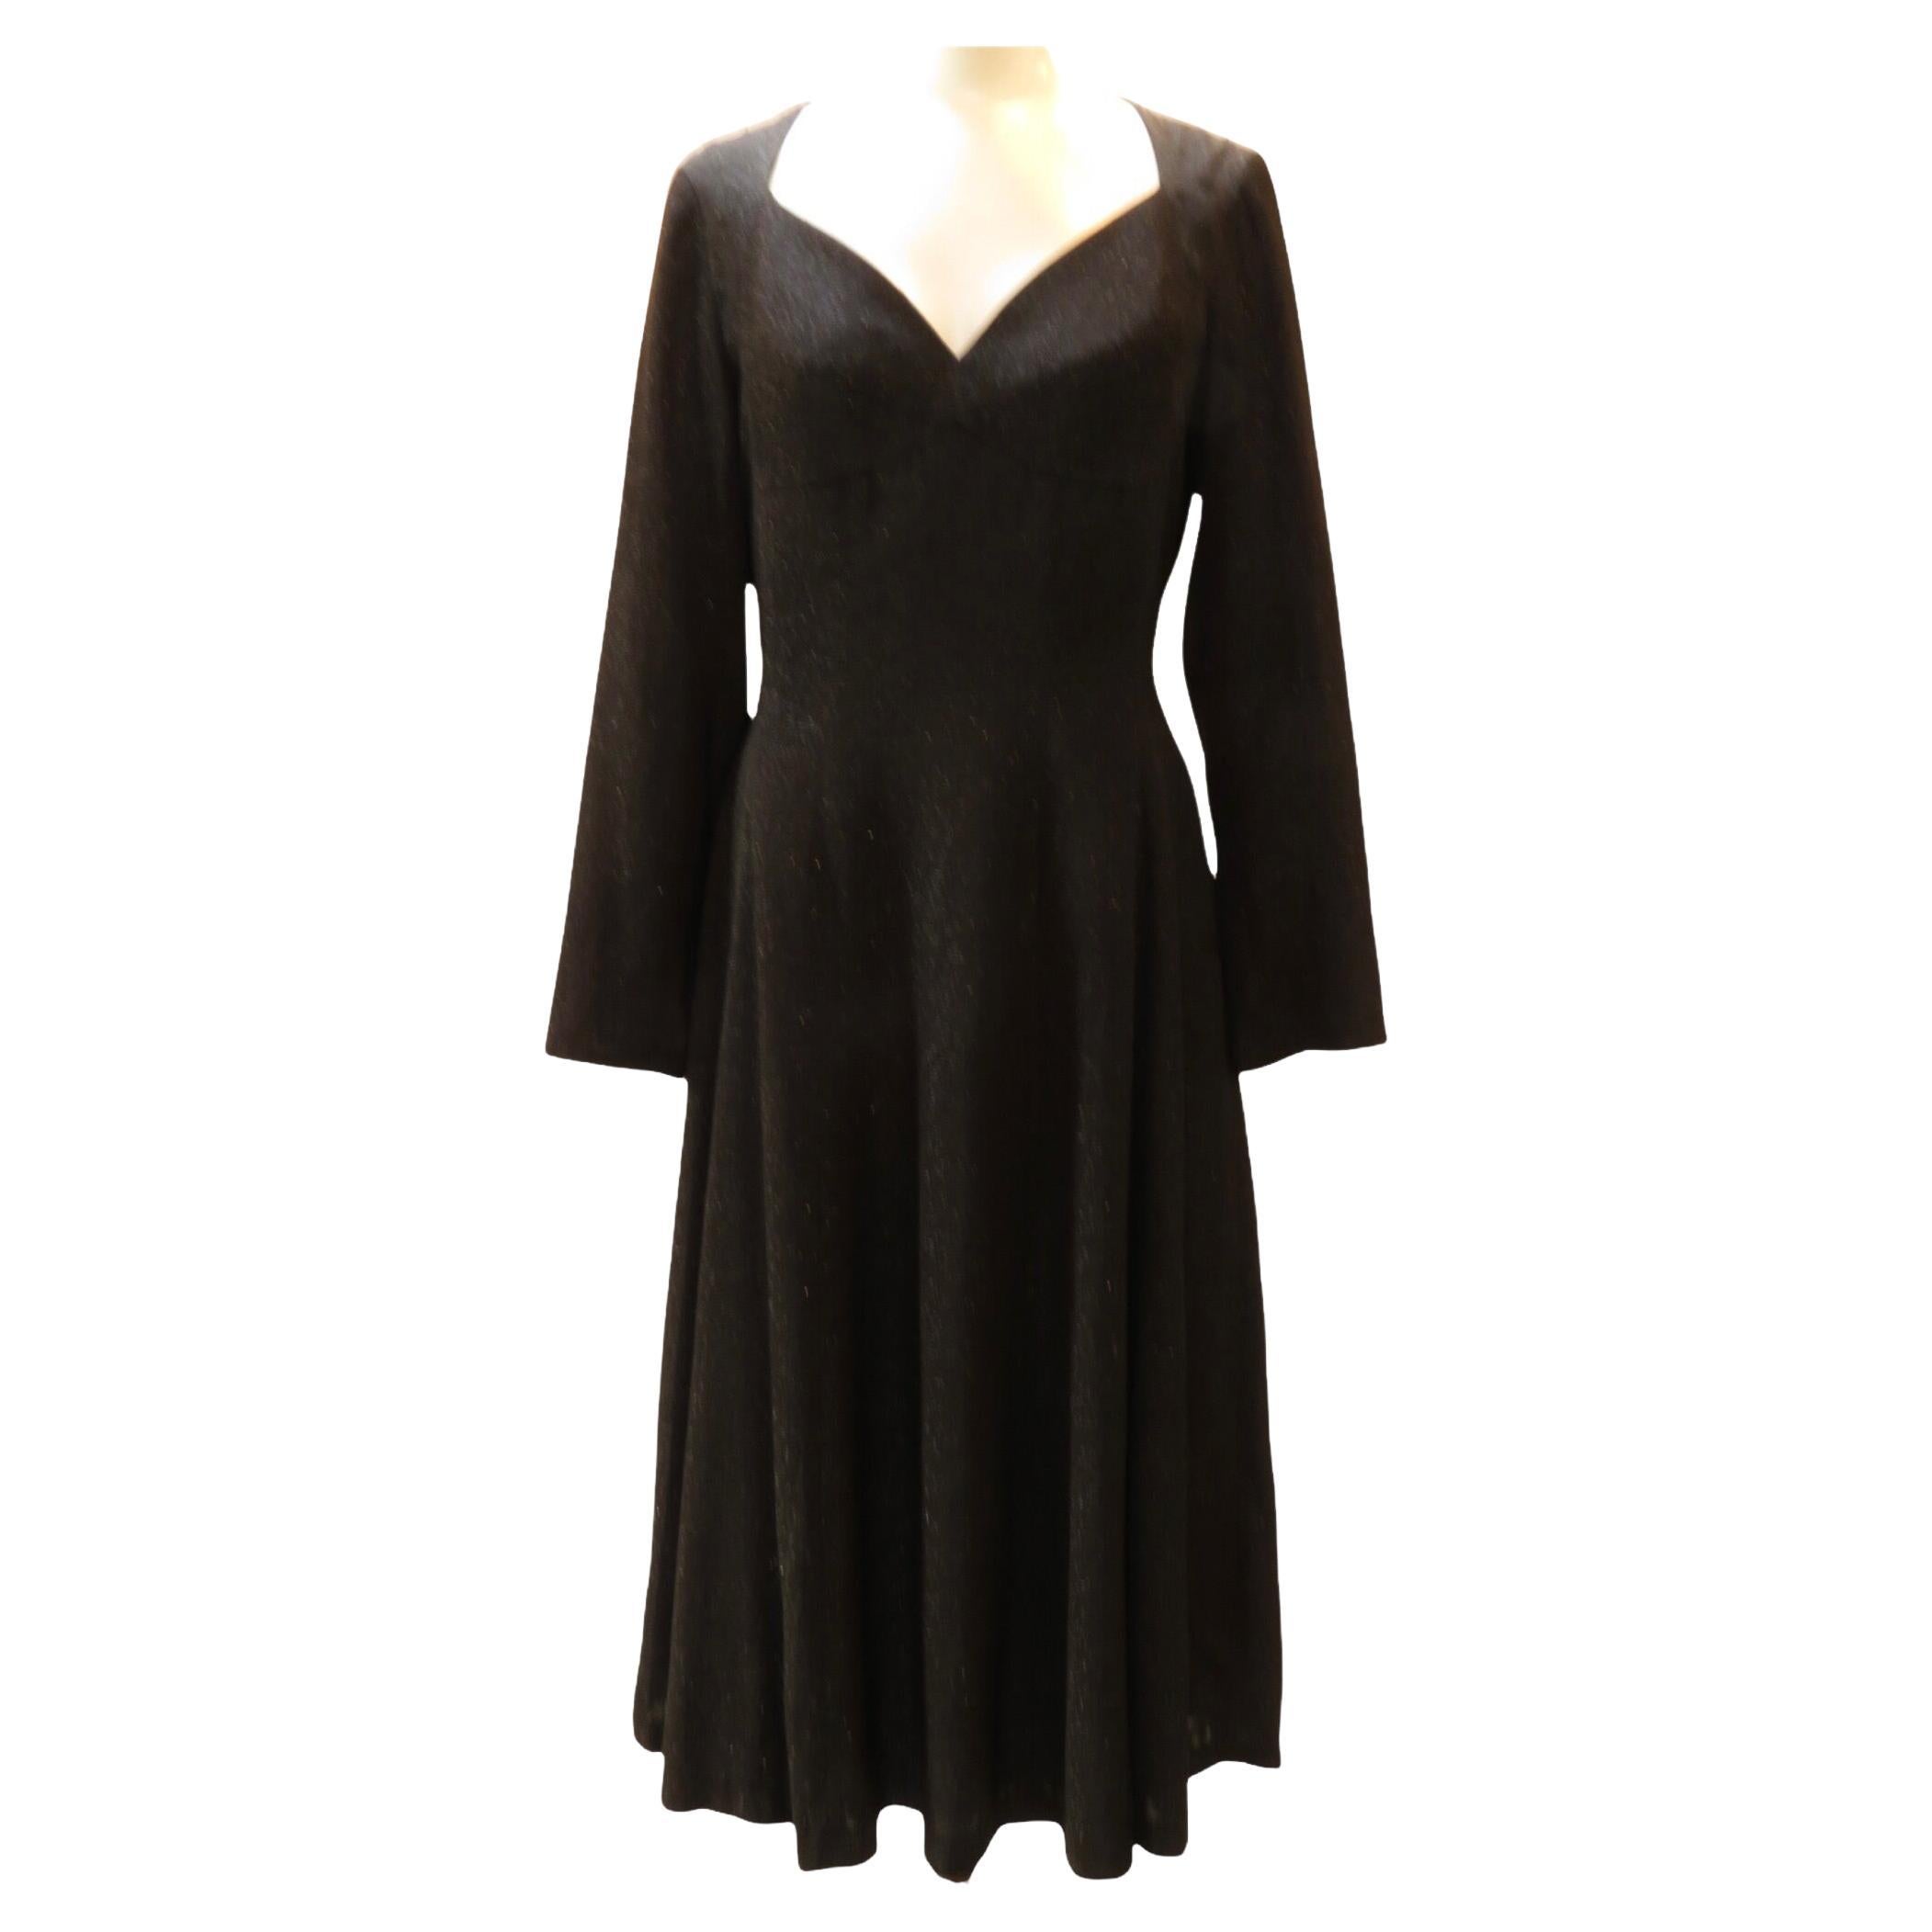 Matsuda Nicole Shimmering Black Dress